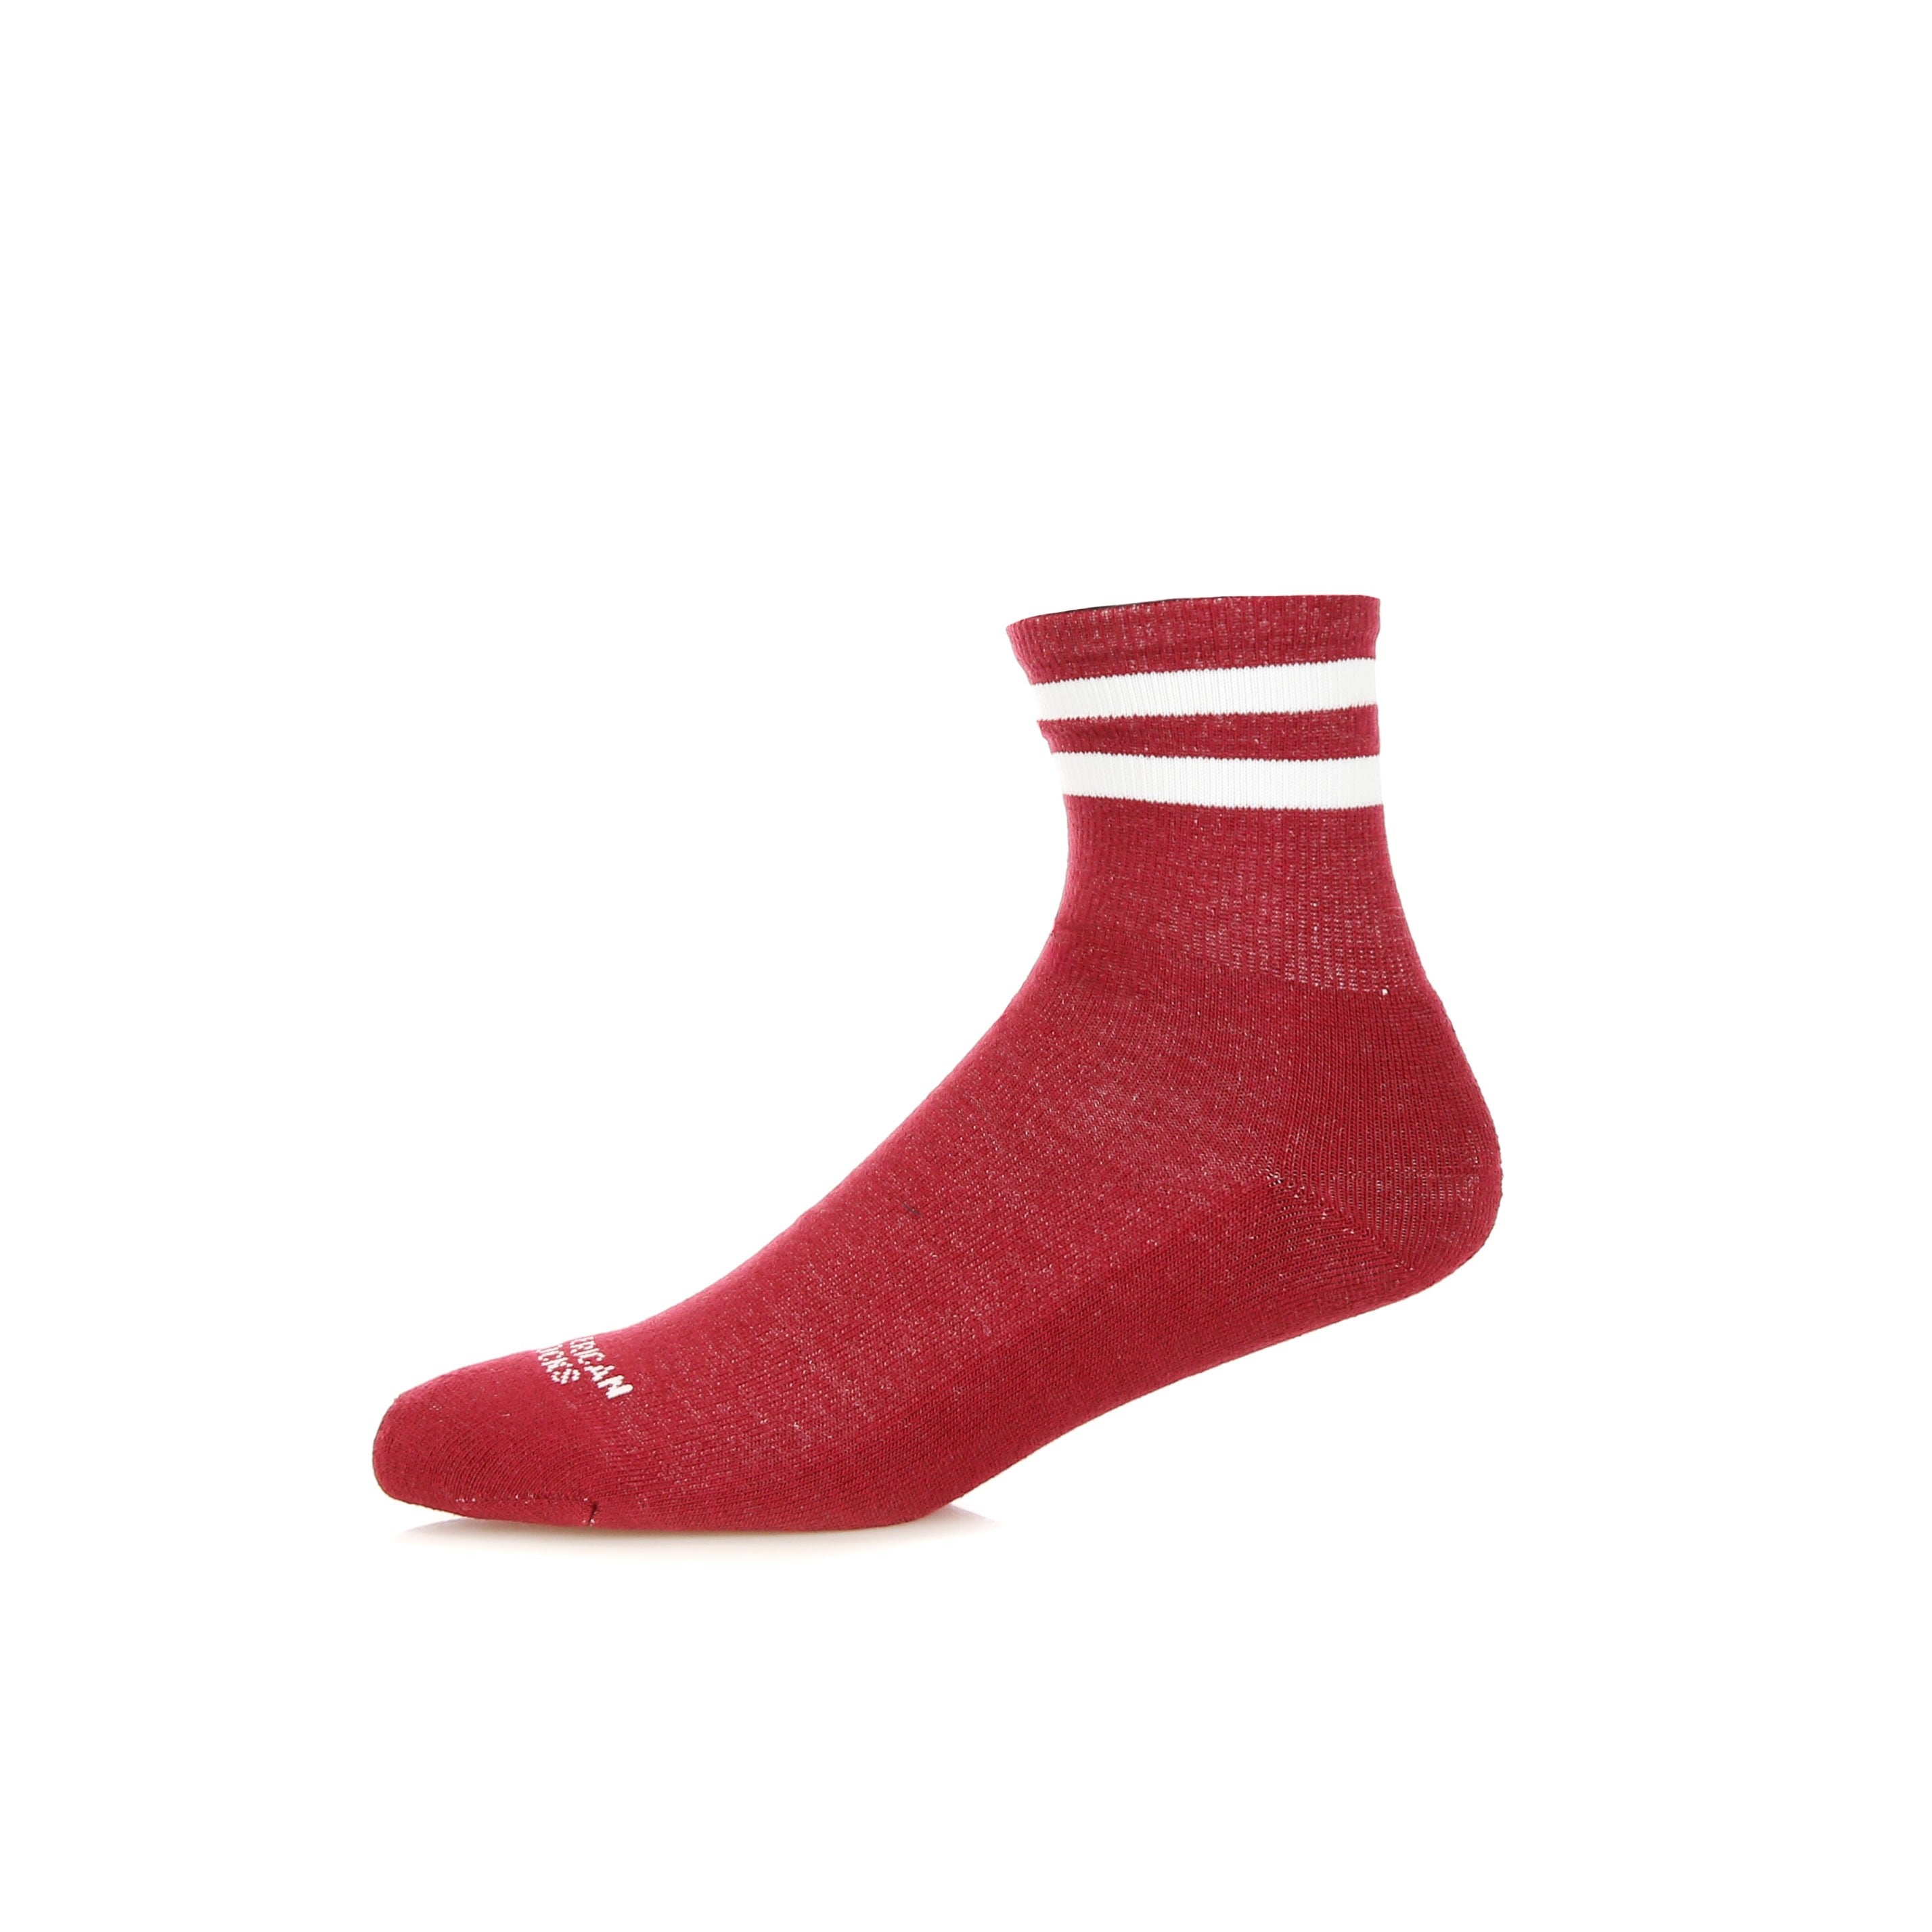 American Socks, Calza Bassa Uomo Crimson, Bordeaux